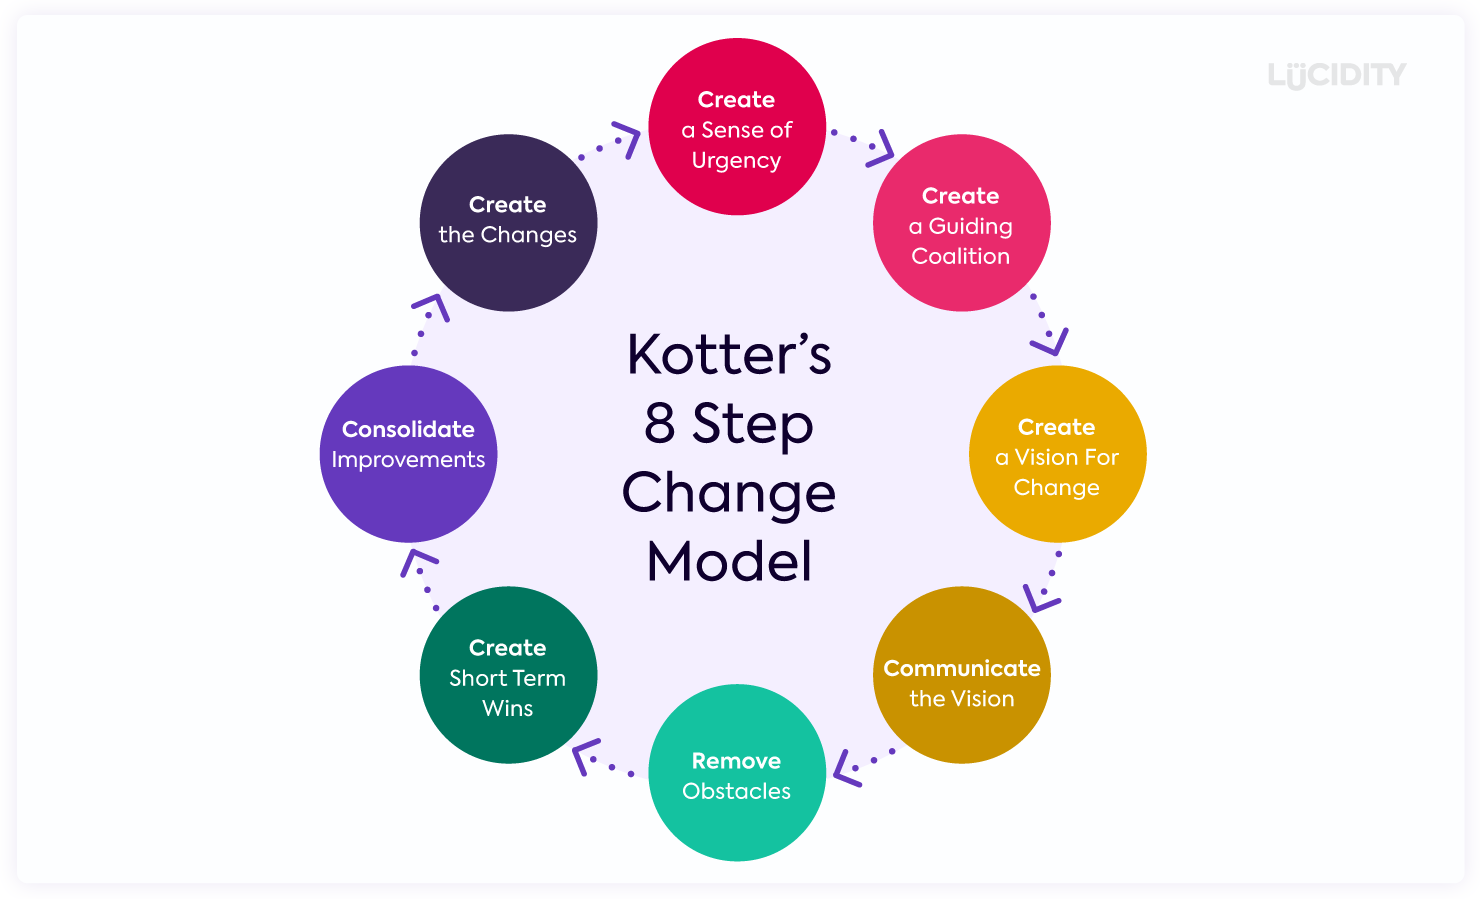 Kotter's 8 Step Change Model